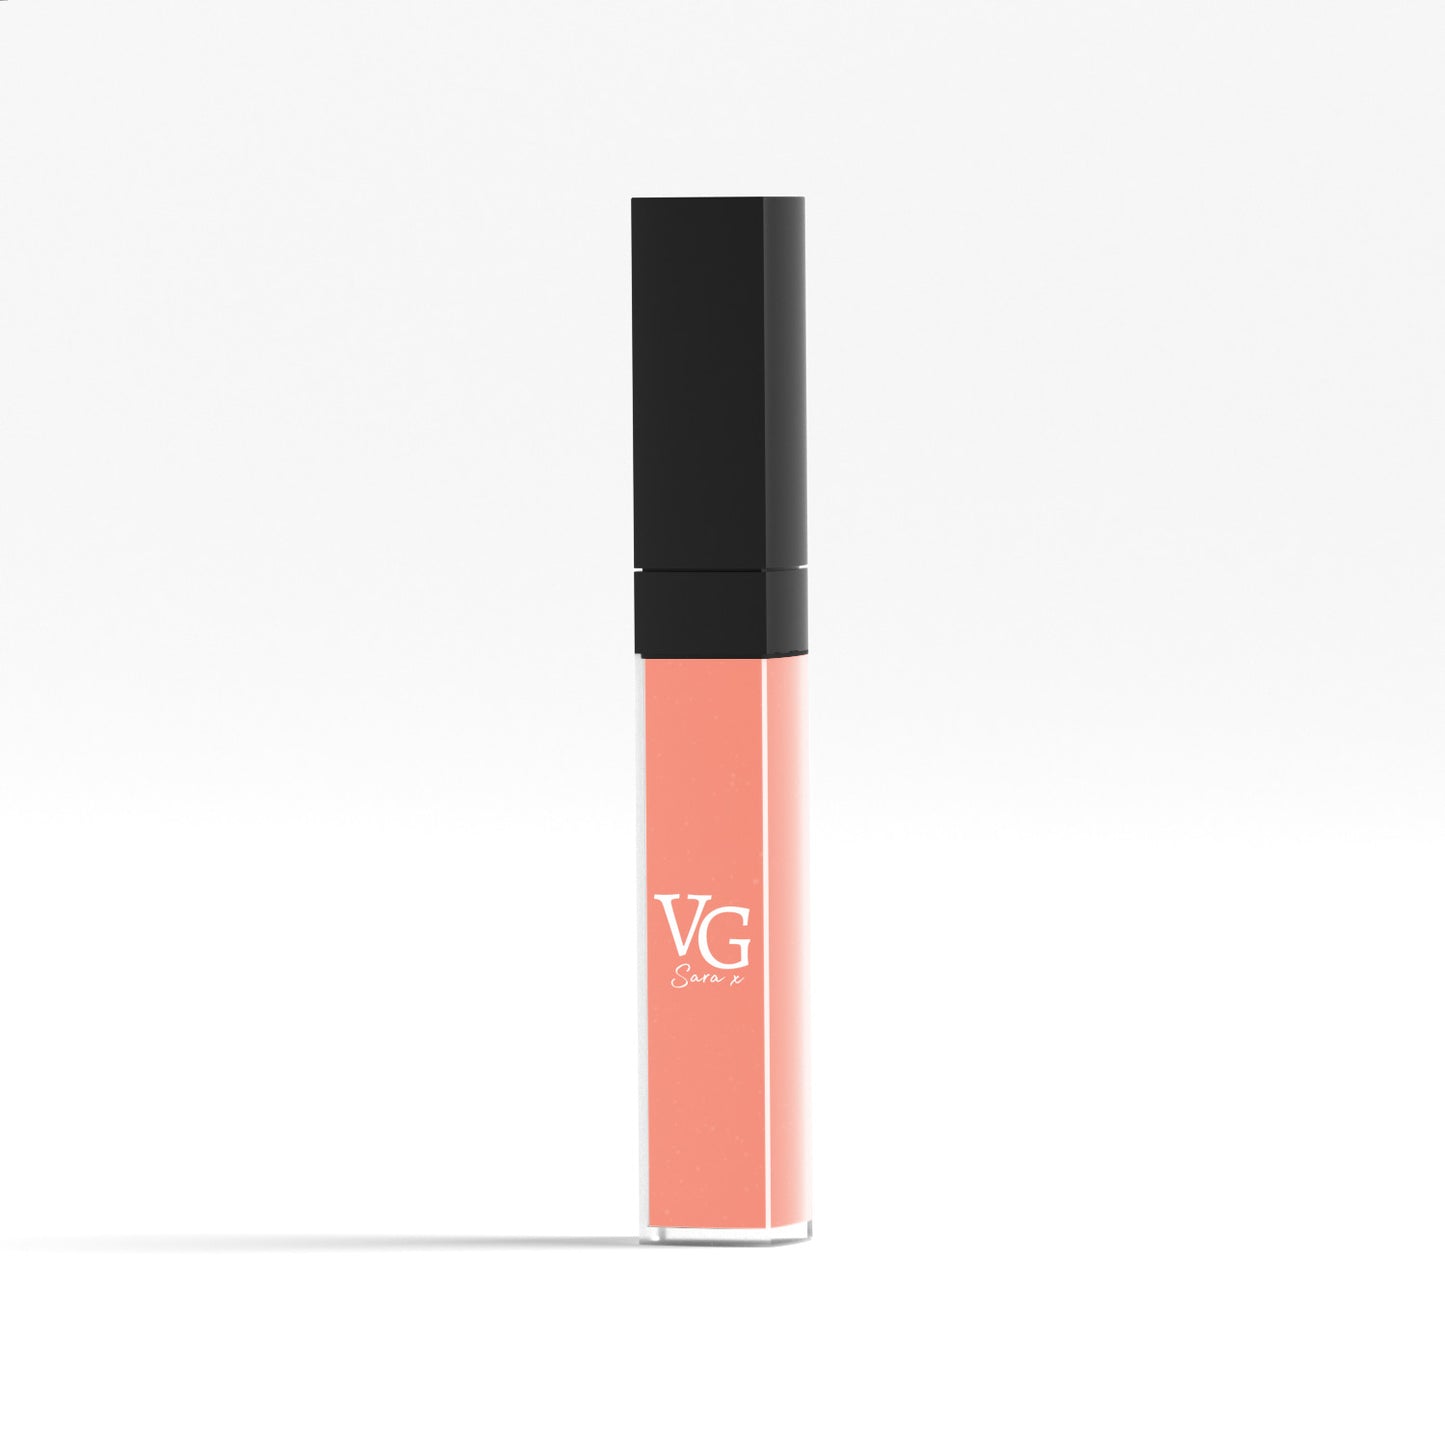 tangerine-colored vegan liquid lip gloss with logo